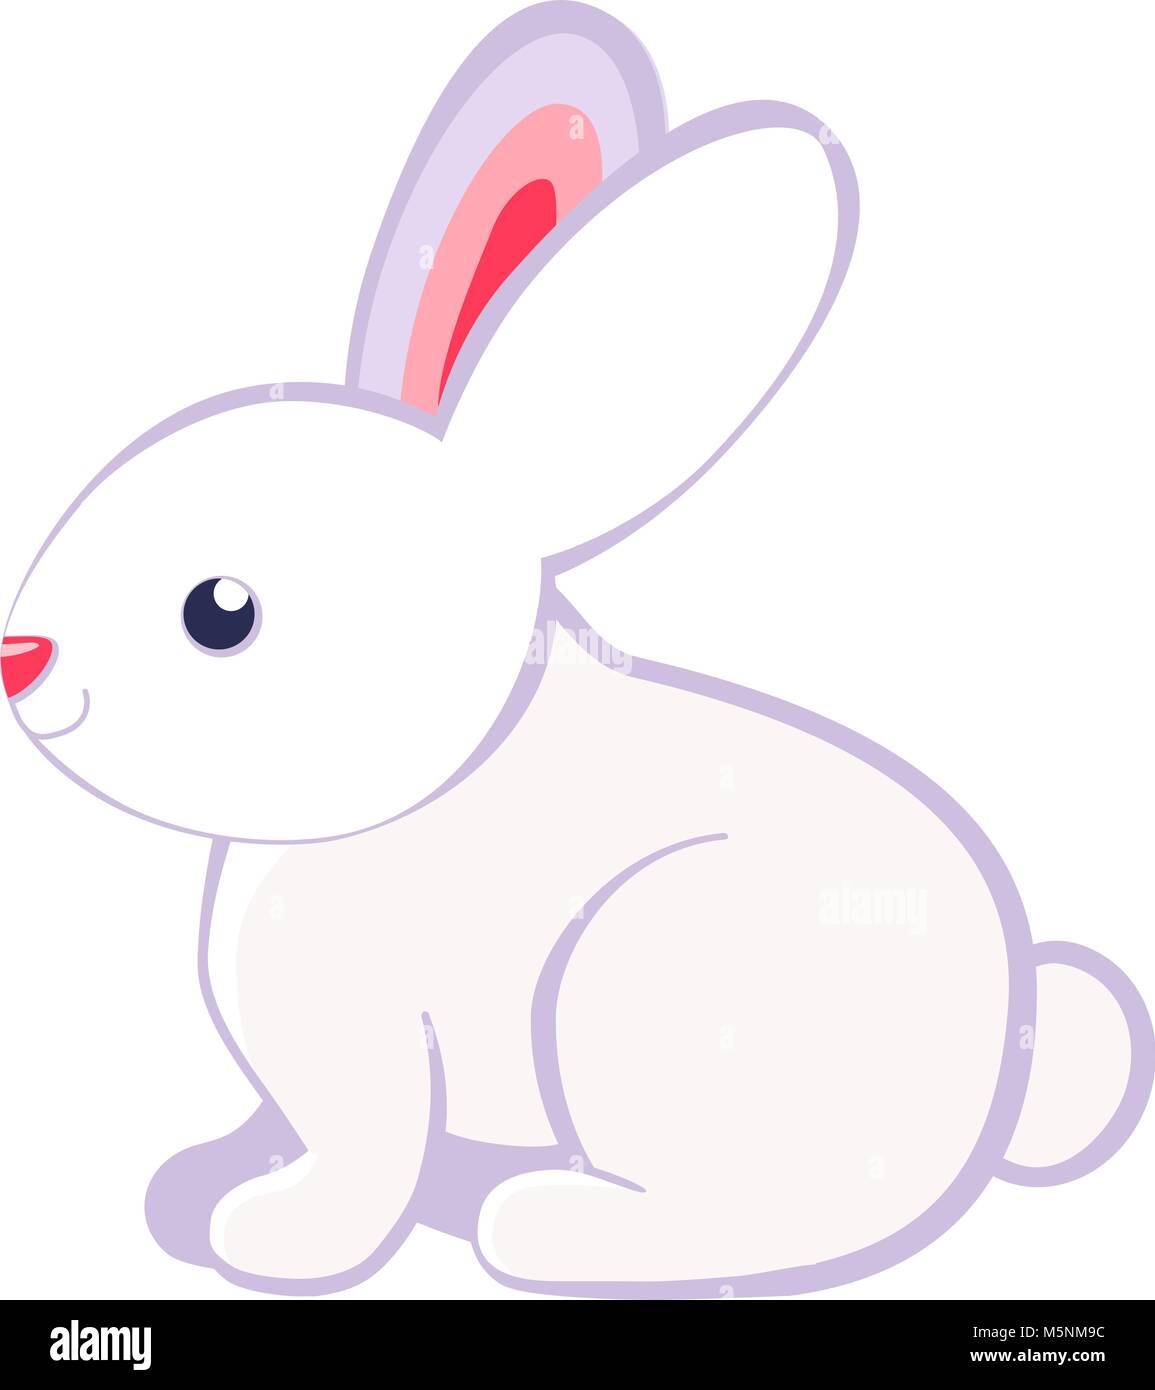 Cartoon rabbit bunny icon poster Stock Vector Image & Art - Alamy